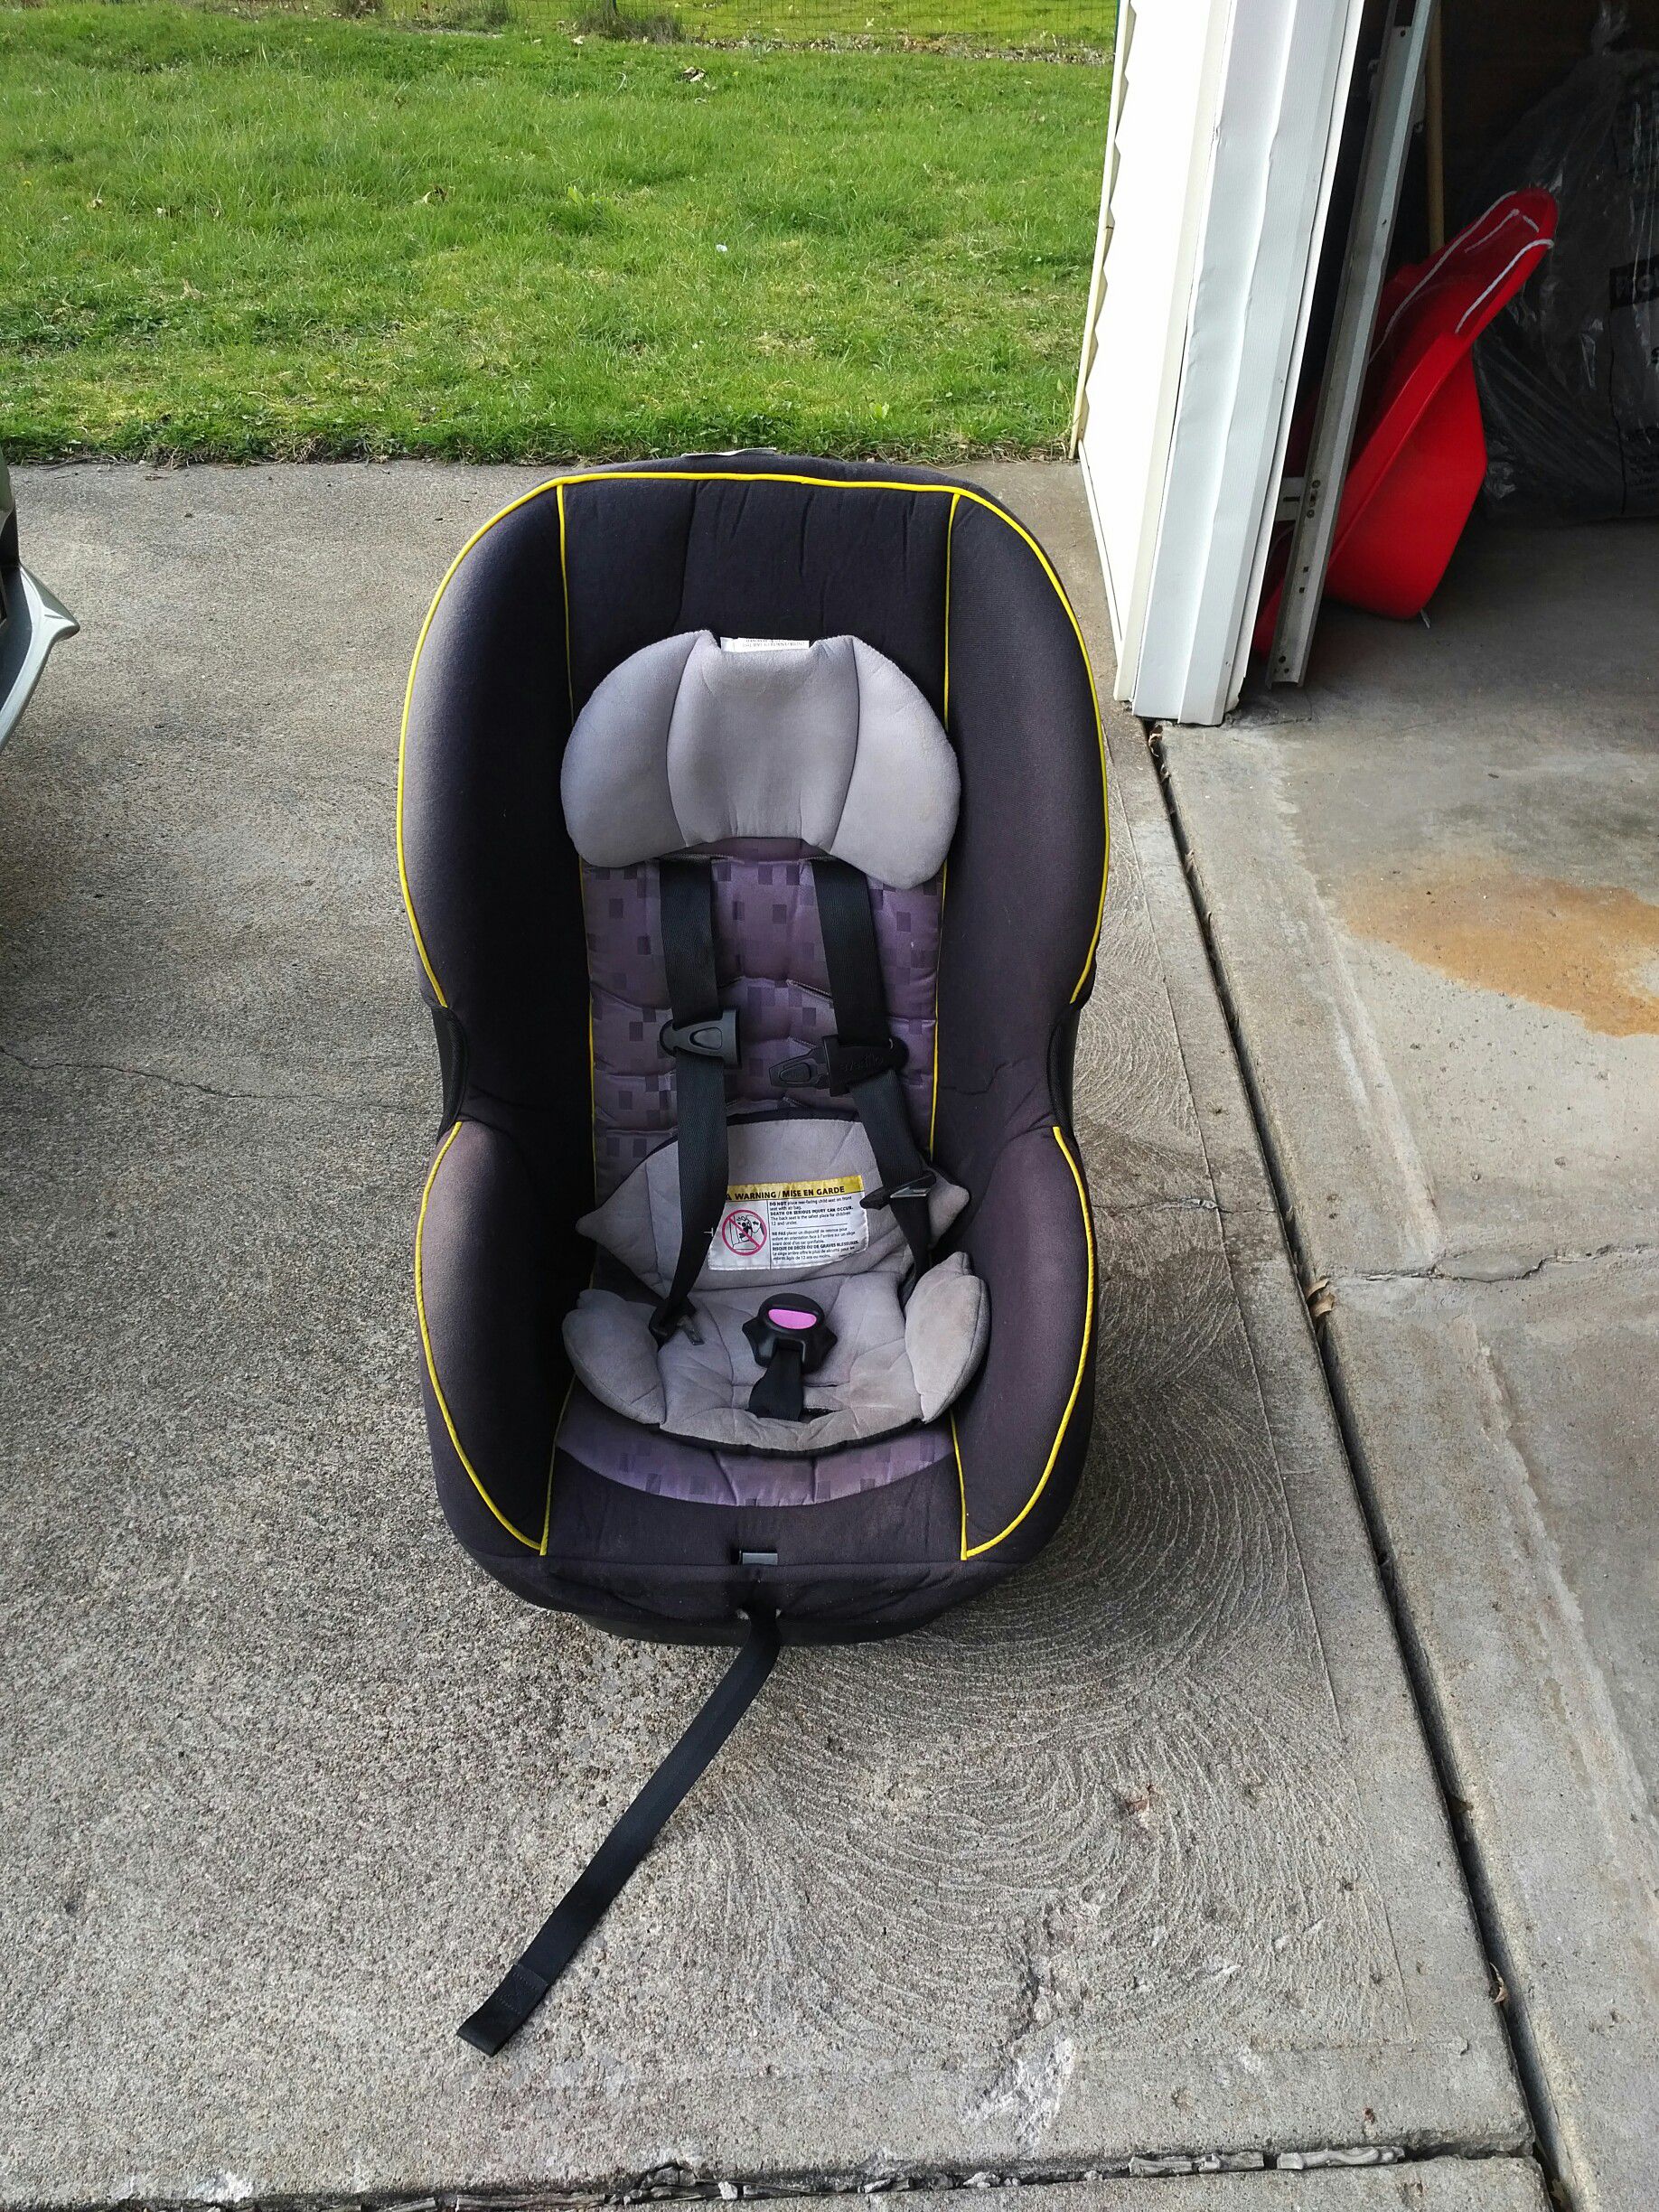 Evenflo children's car seat